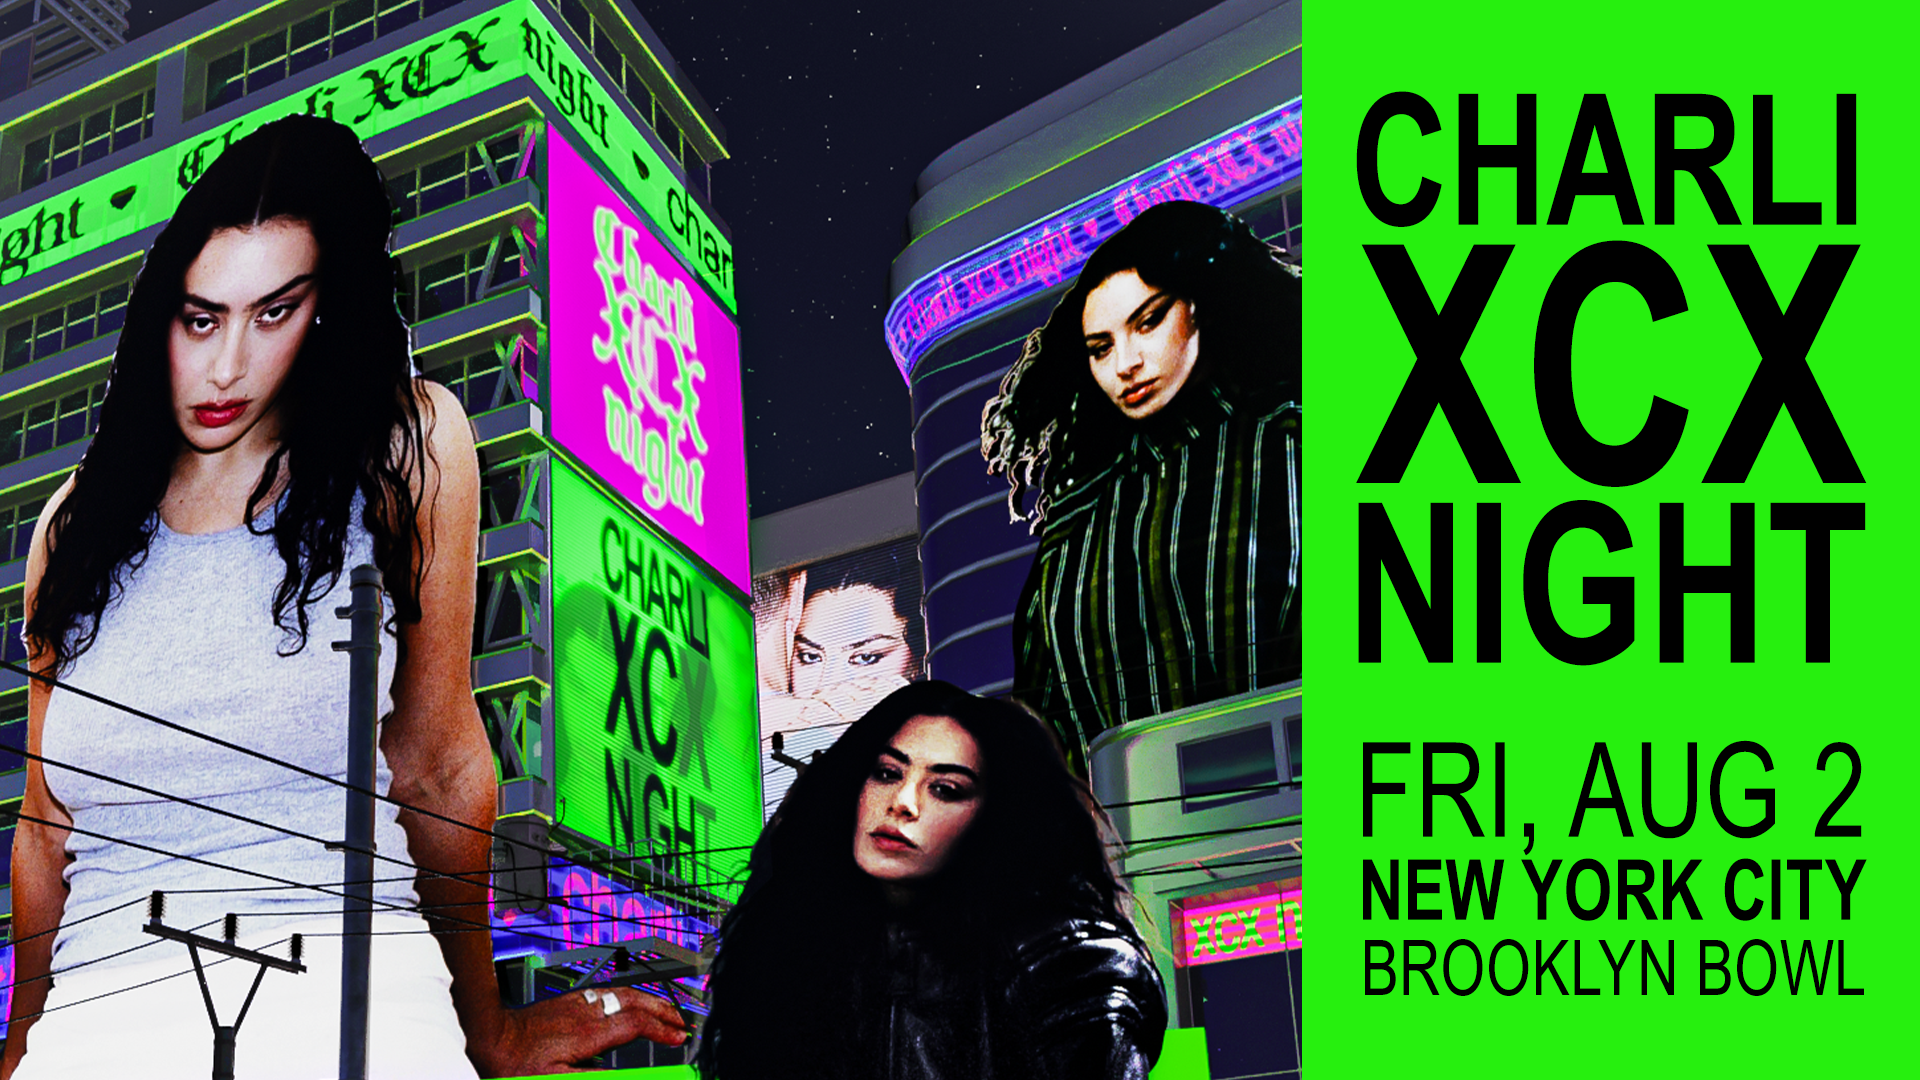 Club 90s Presents: Charli XCX Night